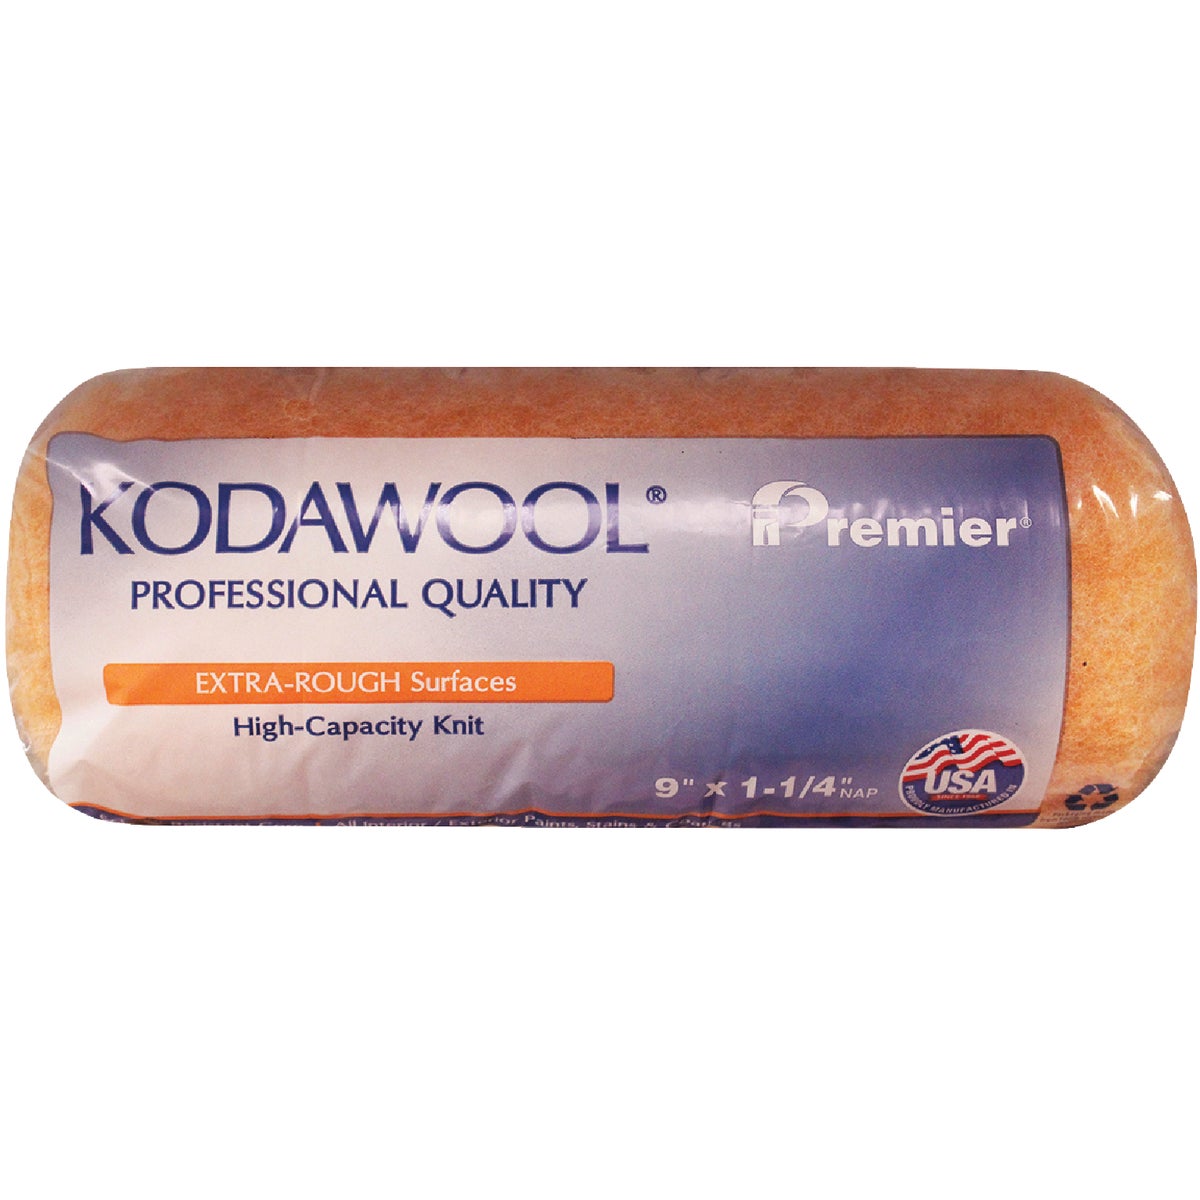 Premier Kodawool 9 In. x 1-1/4 In. Roller Cover